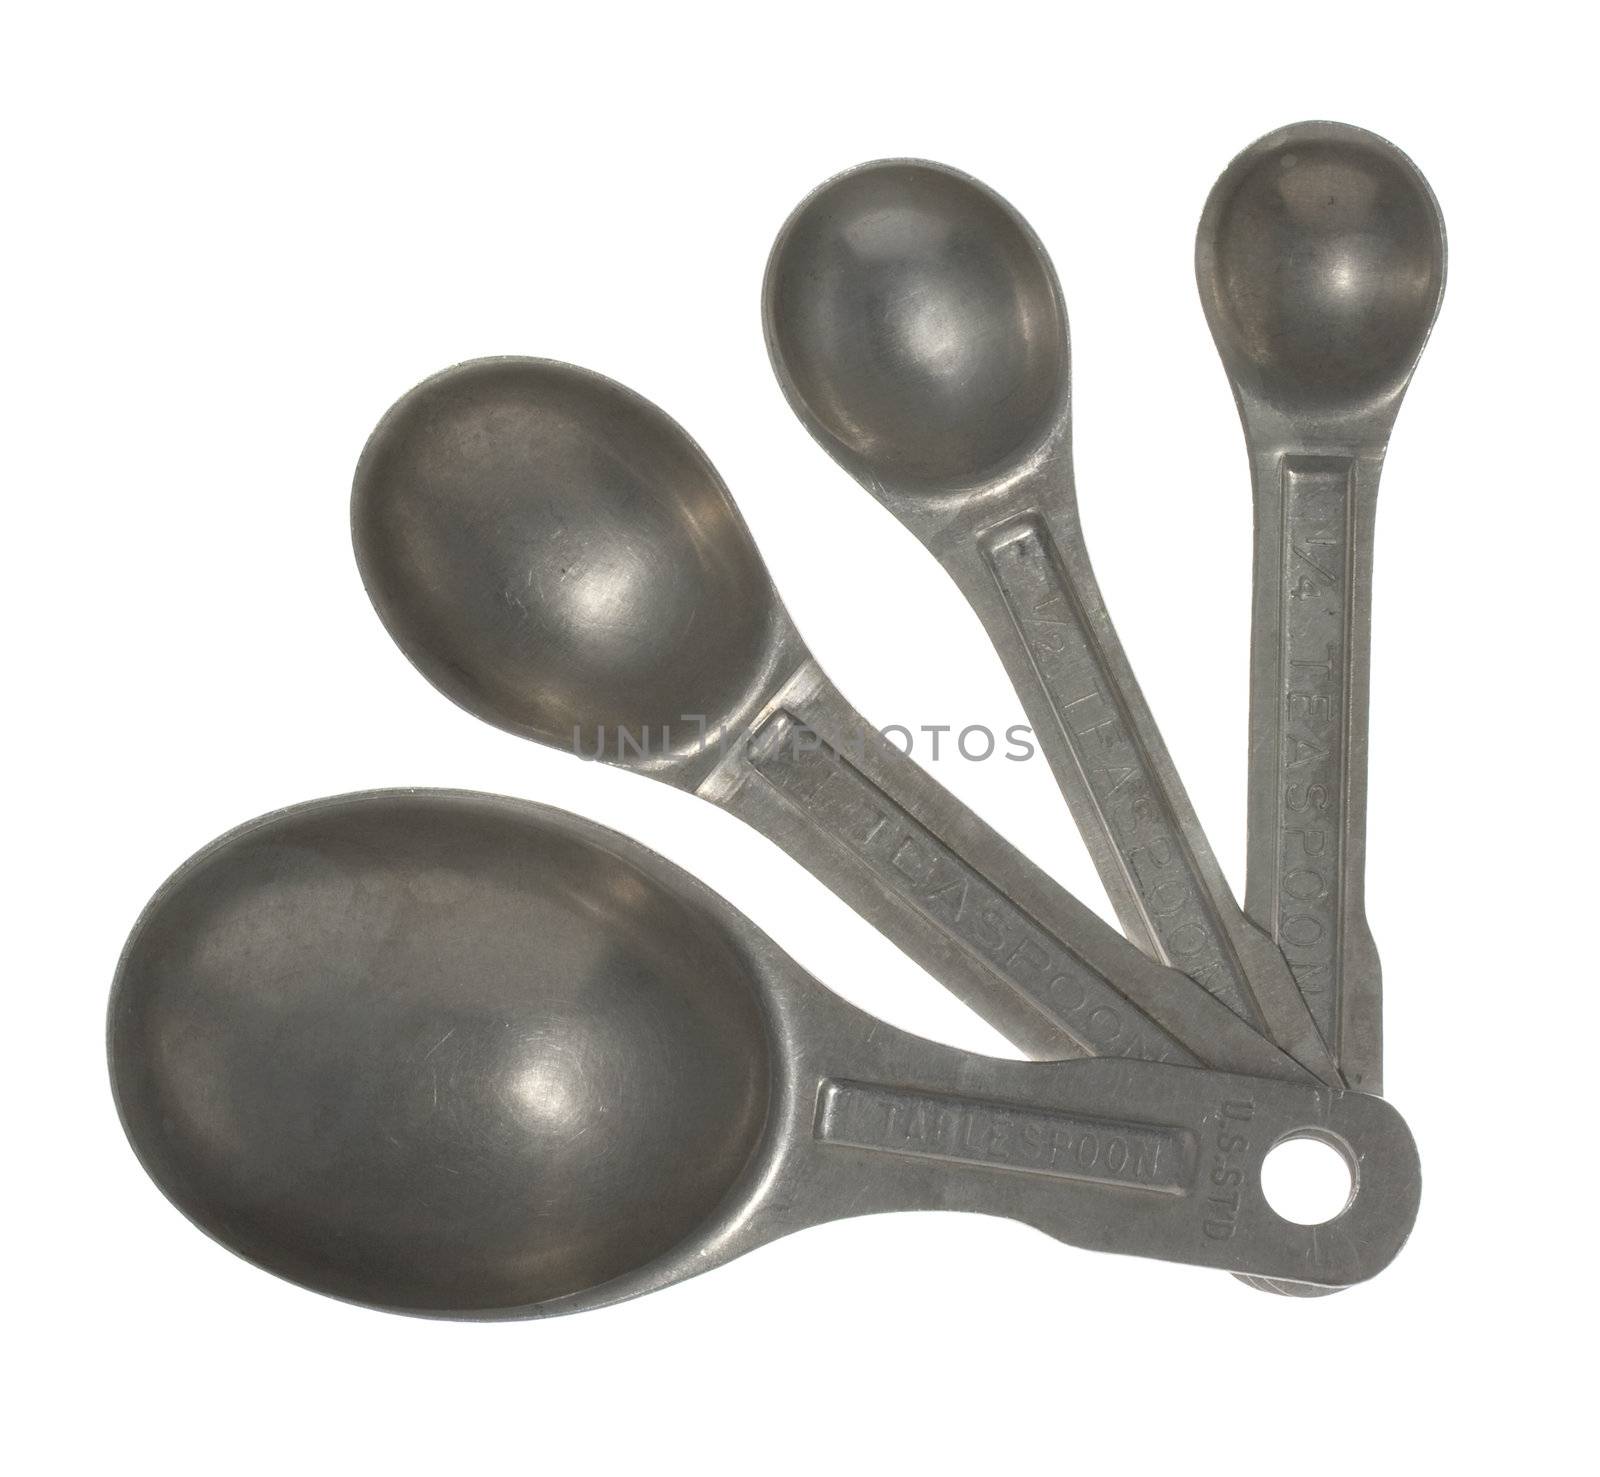 Set of aluminum measuring spoons by PixelsAway